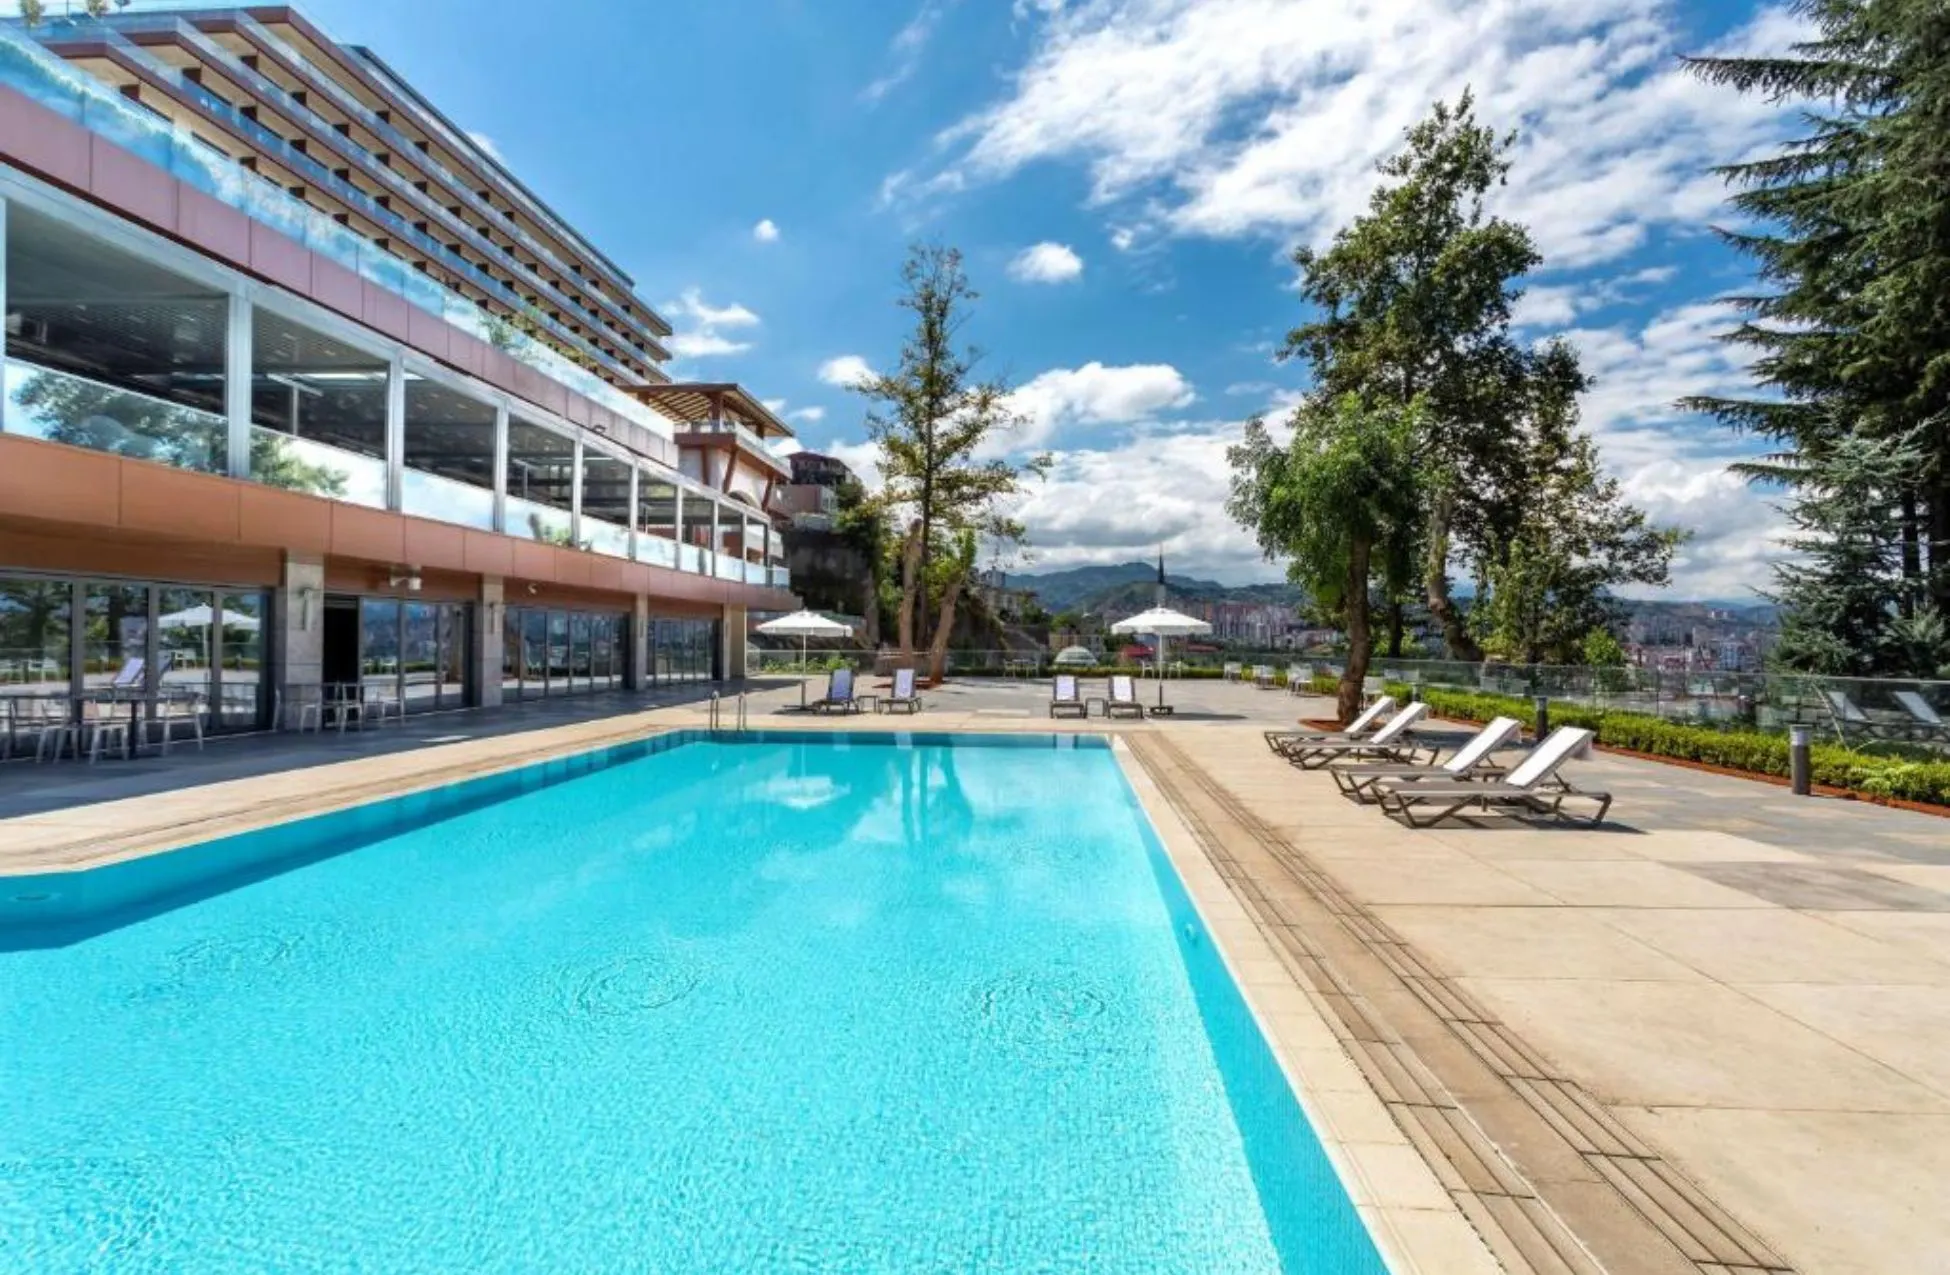 Radisson Blu Hotel Trabzon - Best Hotels In Trabzon